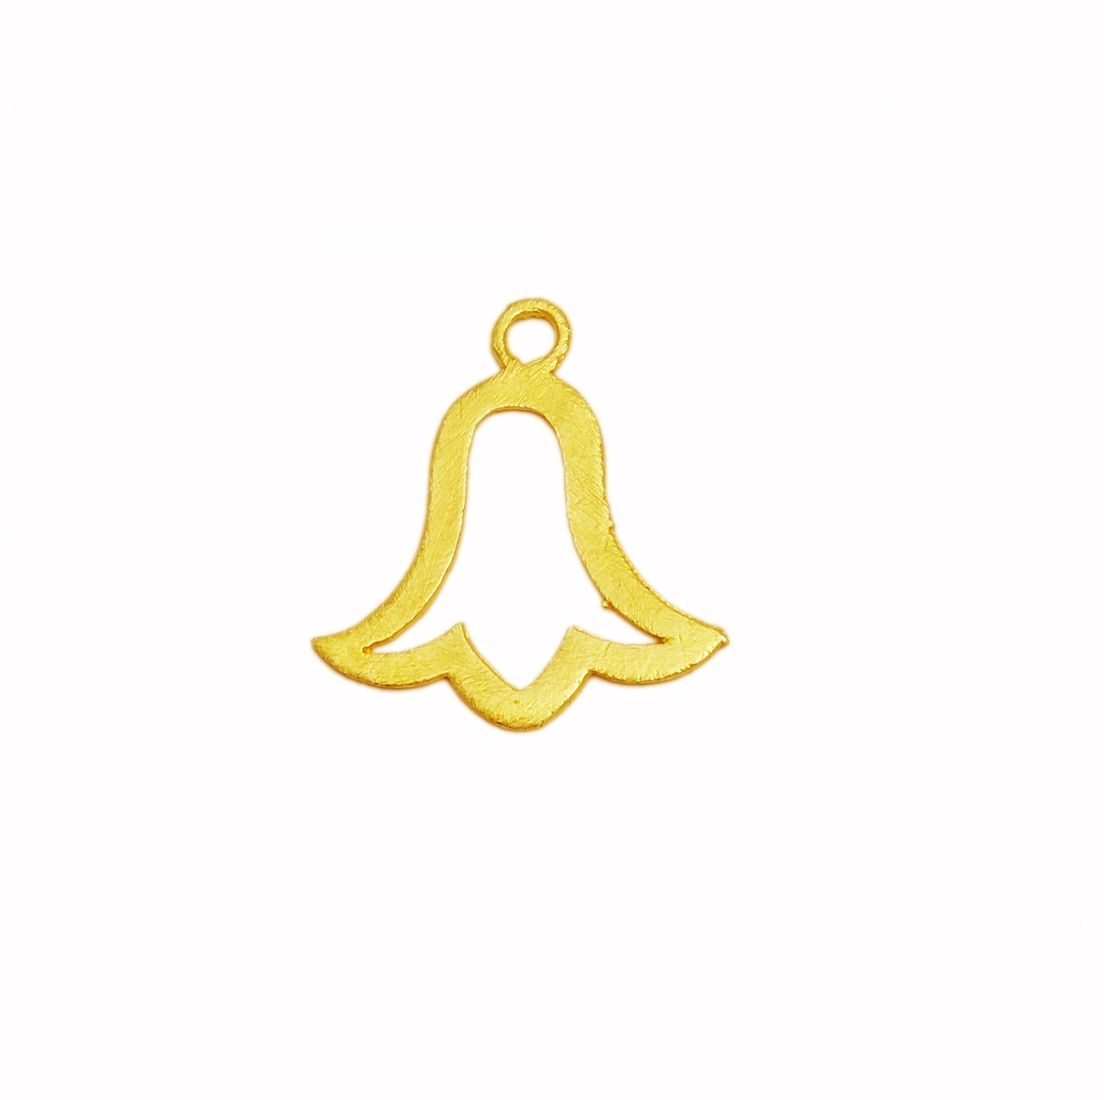 Handmade Gold Plated Temple Bell Metal Charm Pendant - Fancy Bell Shape Pendant